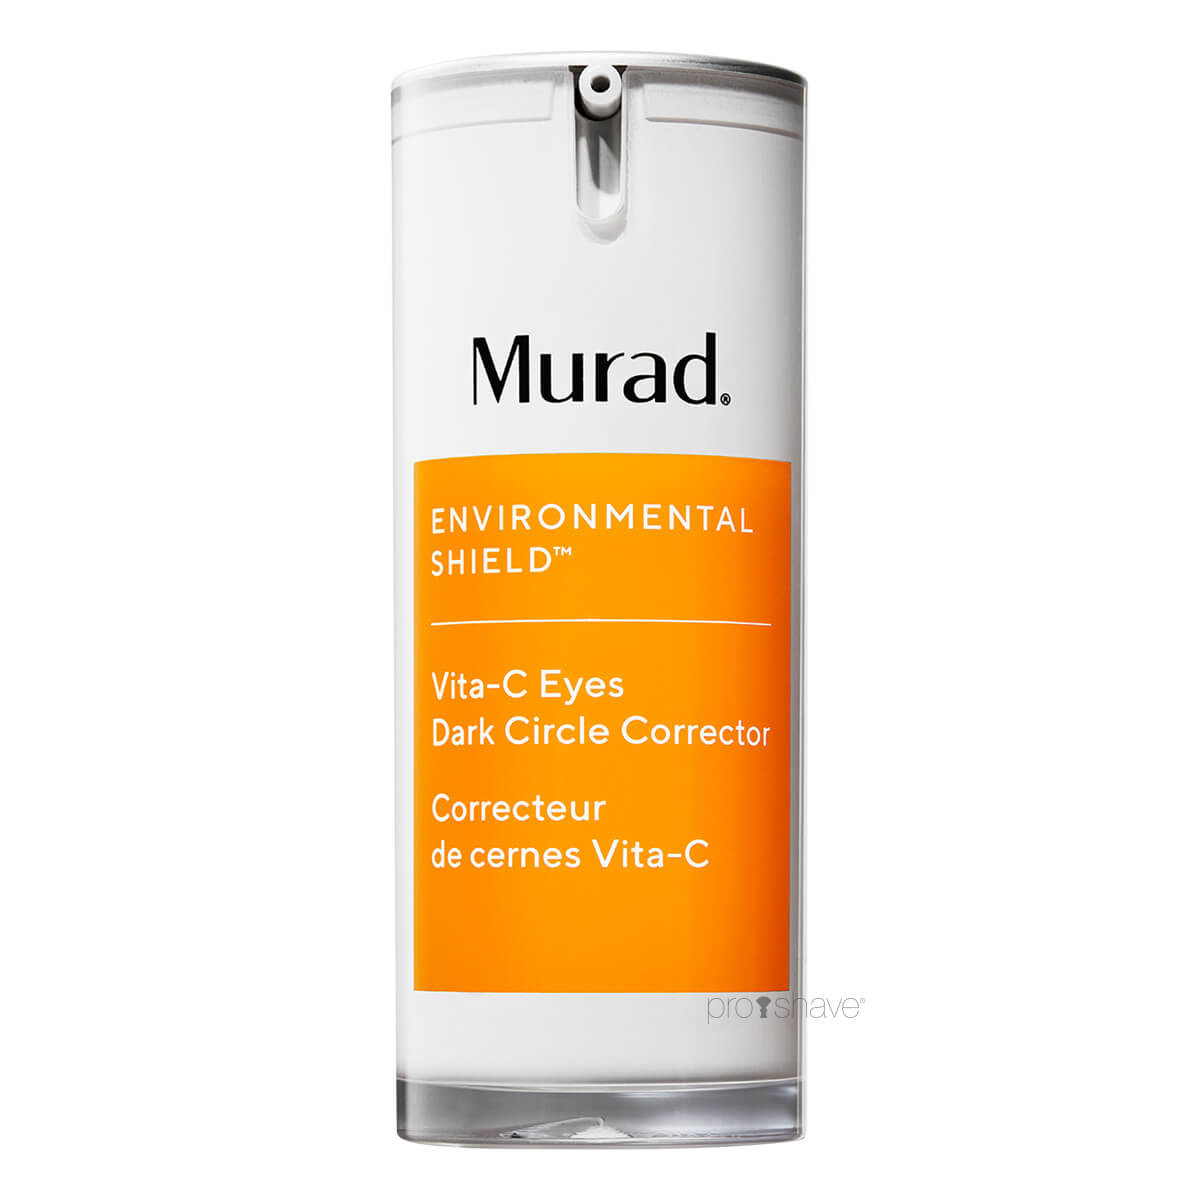 Murad Vita-C Eyes Dark Circle Corrector, Environmental Shield, 15 ml.